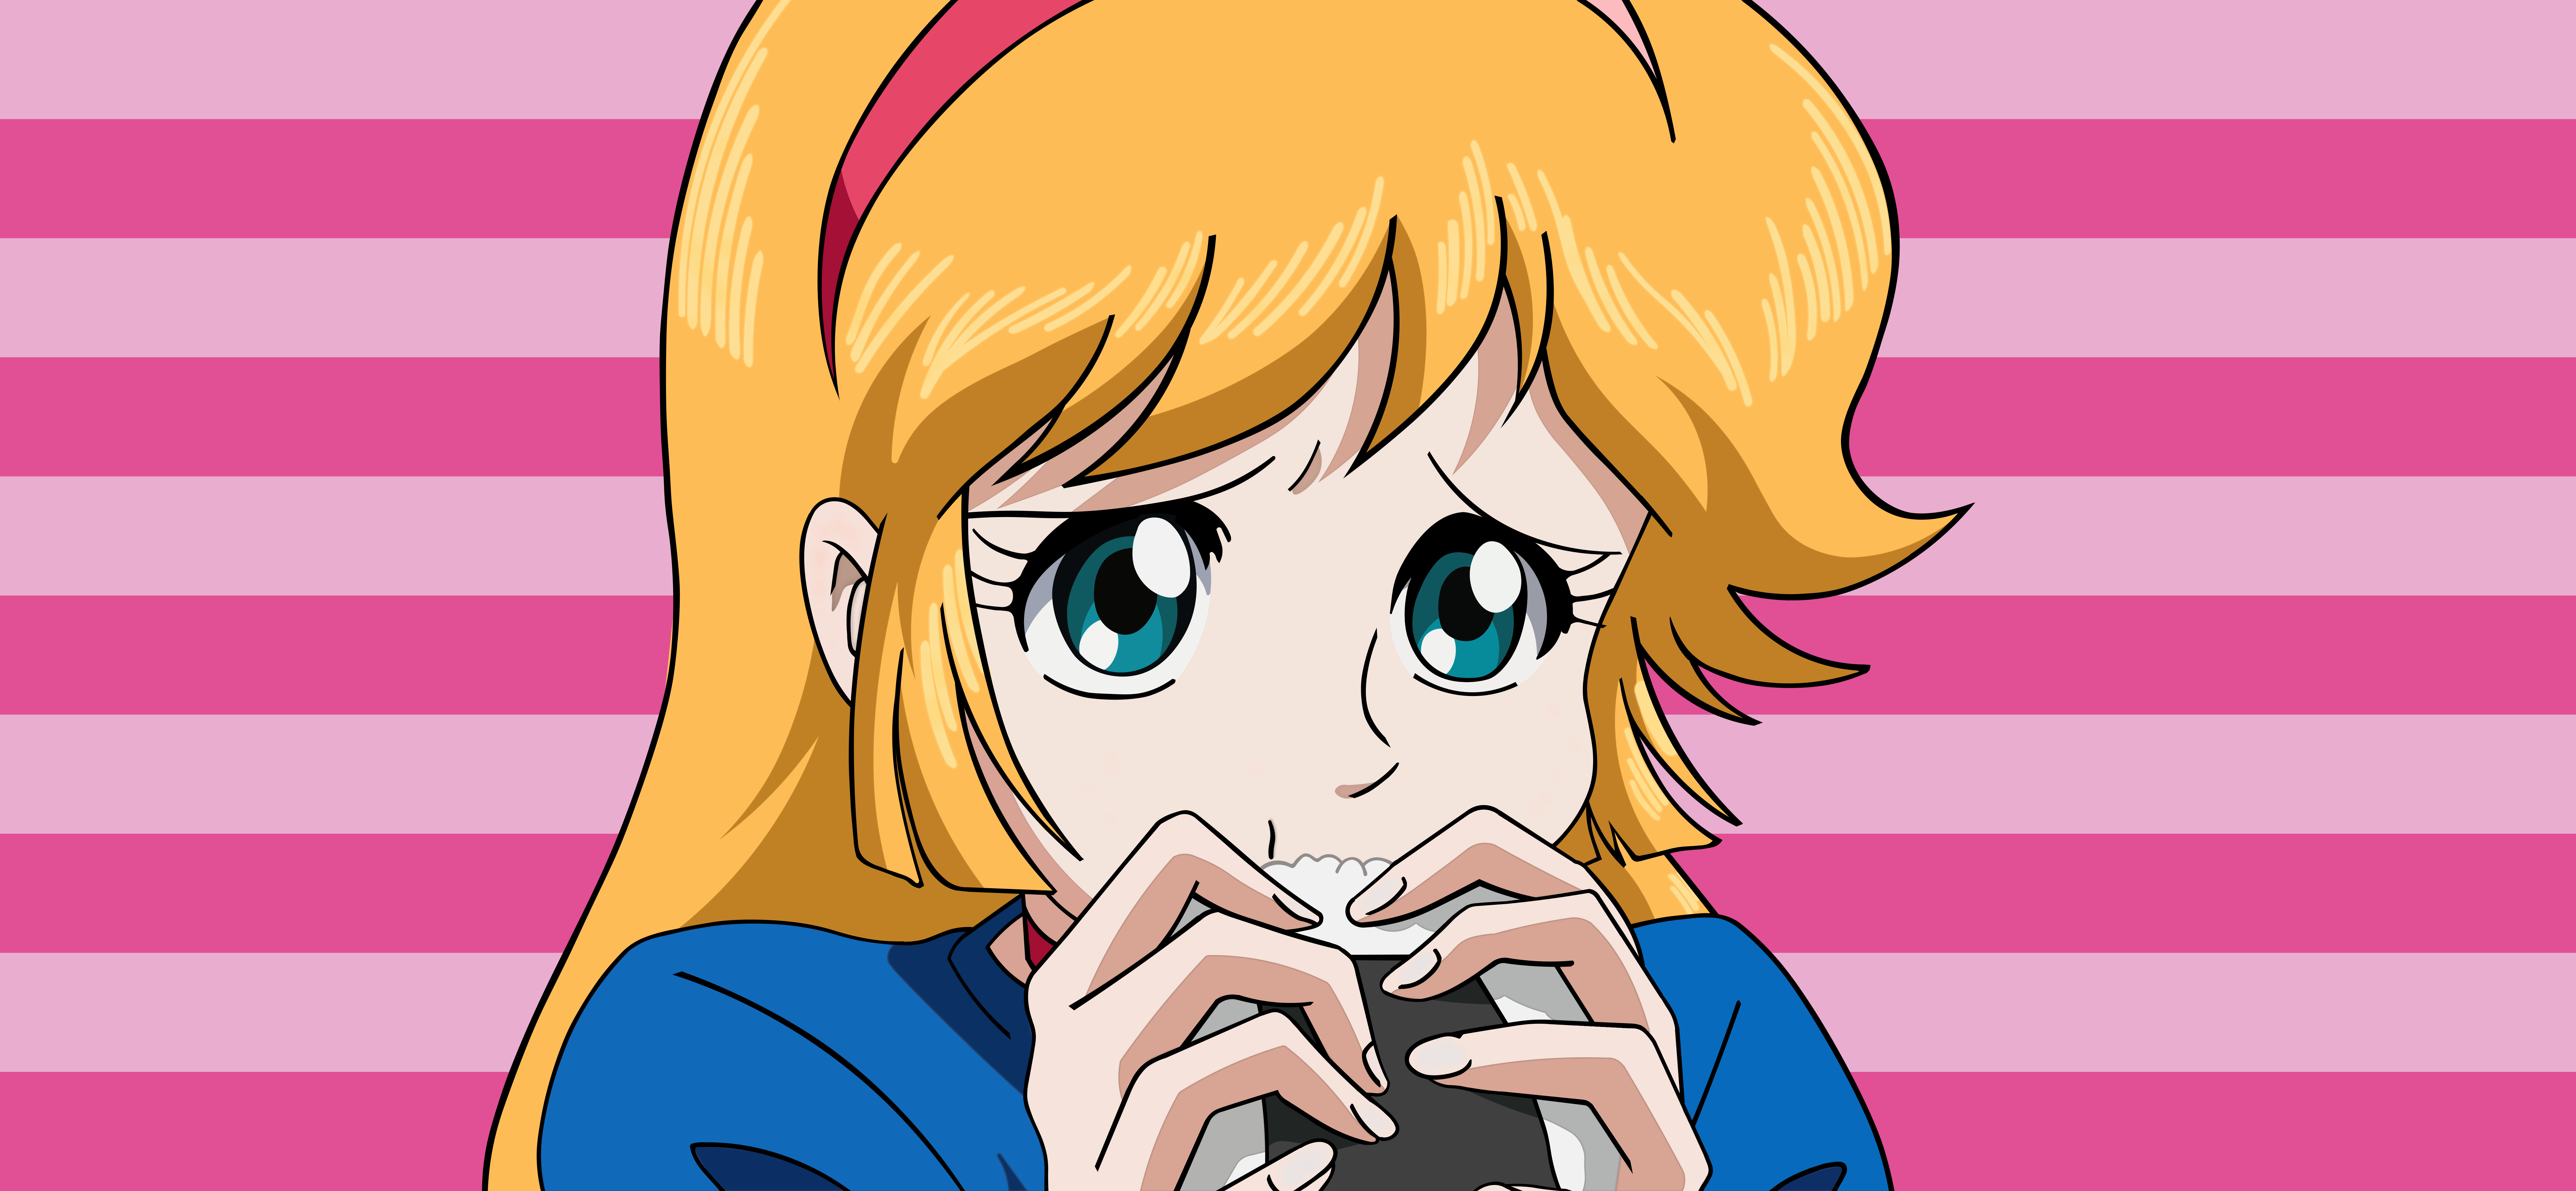 Anime 9000x4160 Re: Cutie Honey anime girls simple background blonde blue eyes rice balls food eating